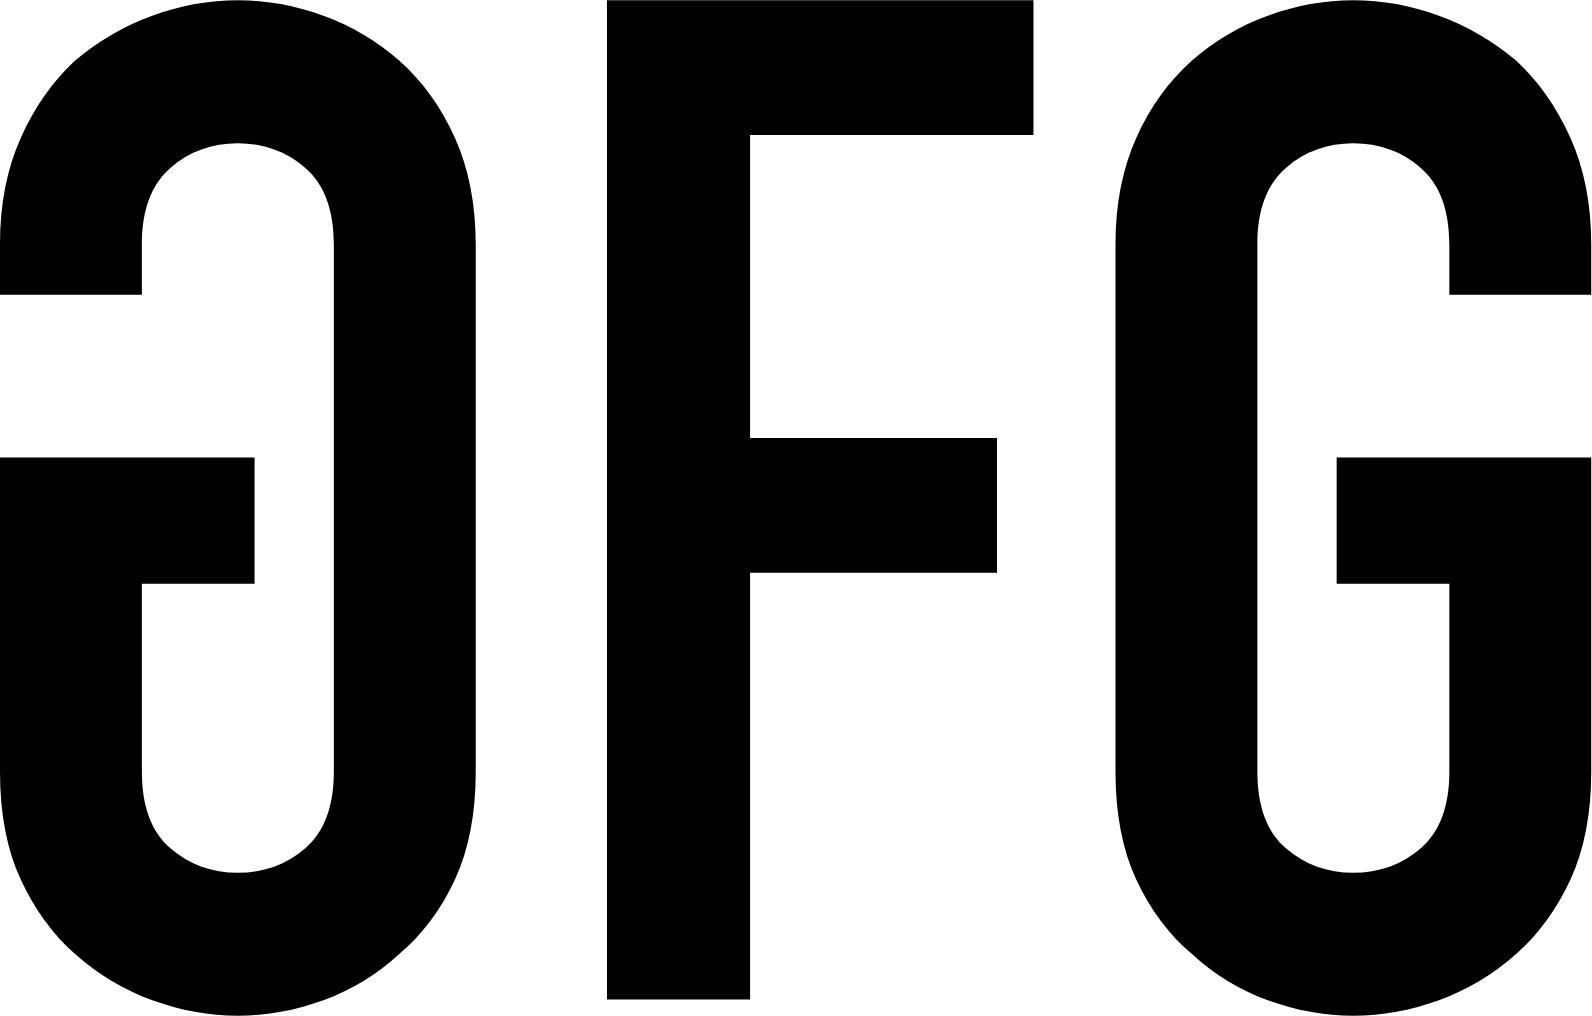 Global Fashion Group logo (PNG transparent)